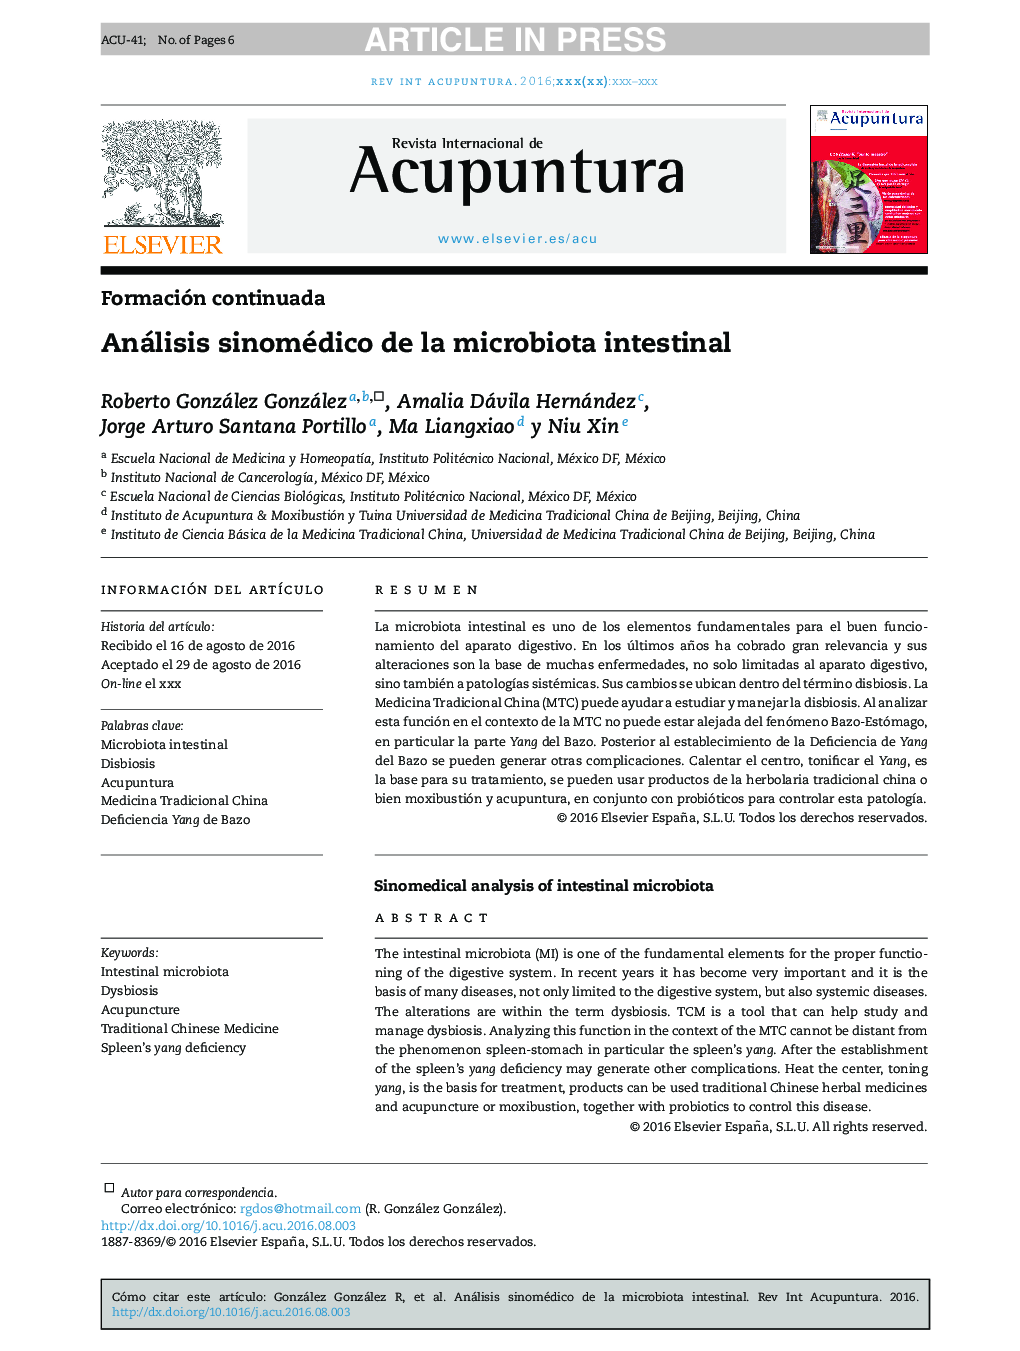 Análisis sinomédico de la microbiota intestinal